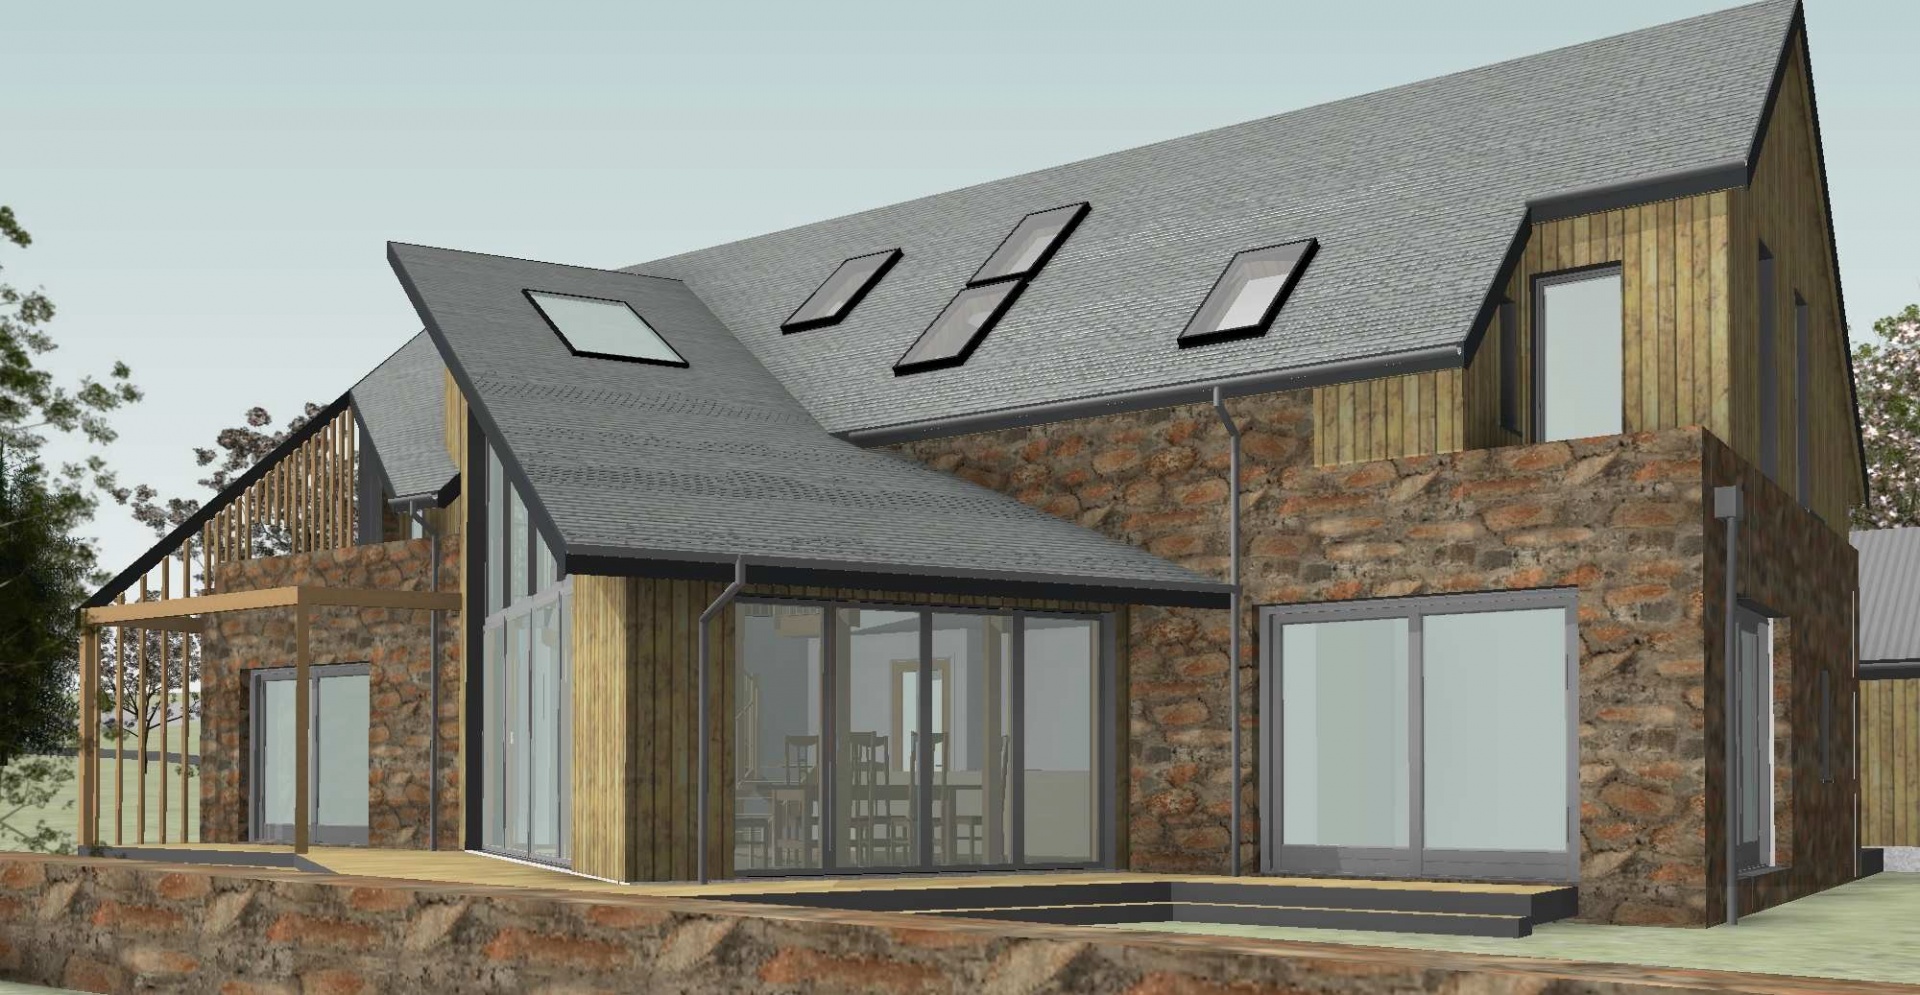 FAKRO roof windows for Aberdeenshire Passivhaus self-build